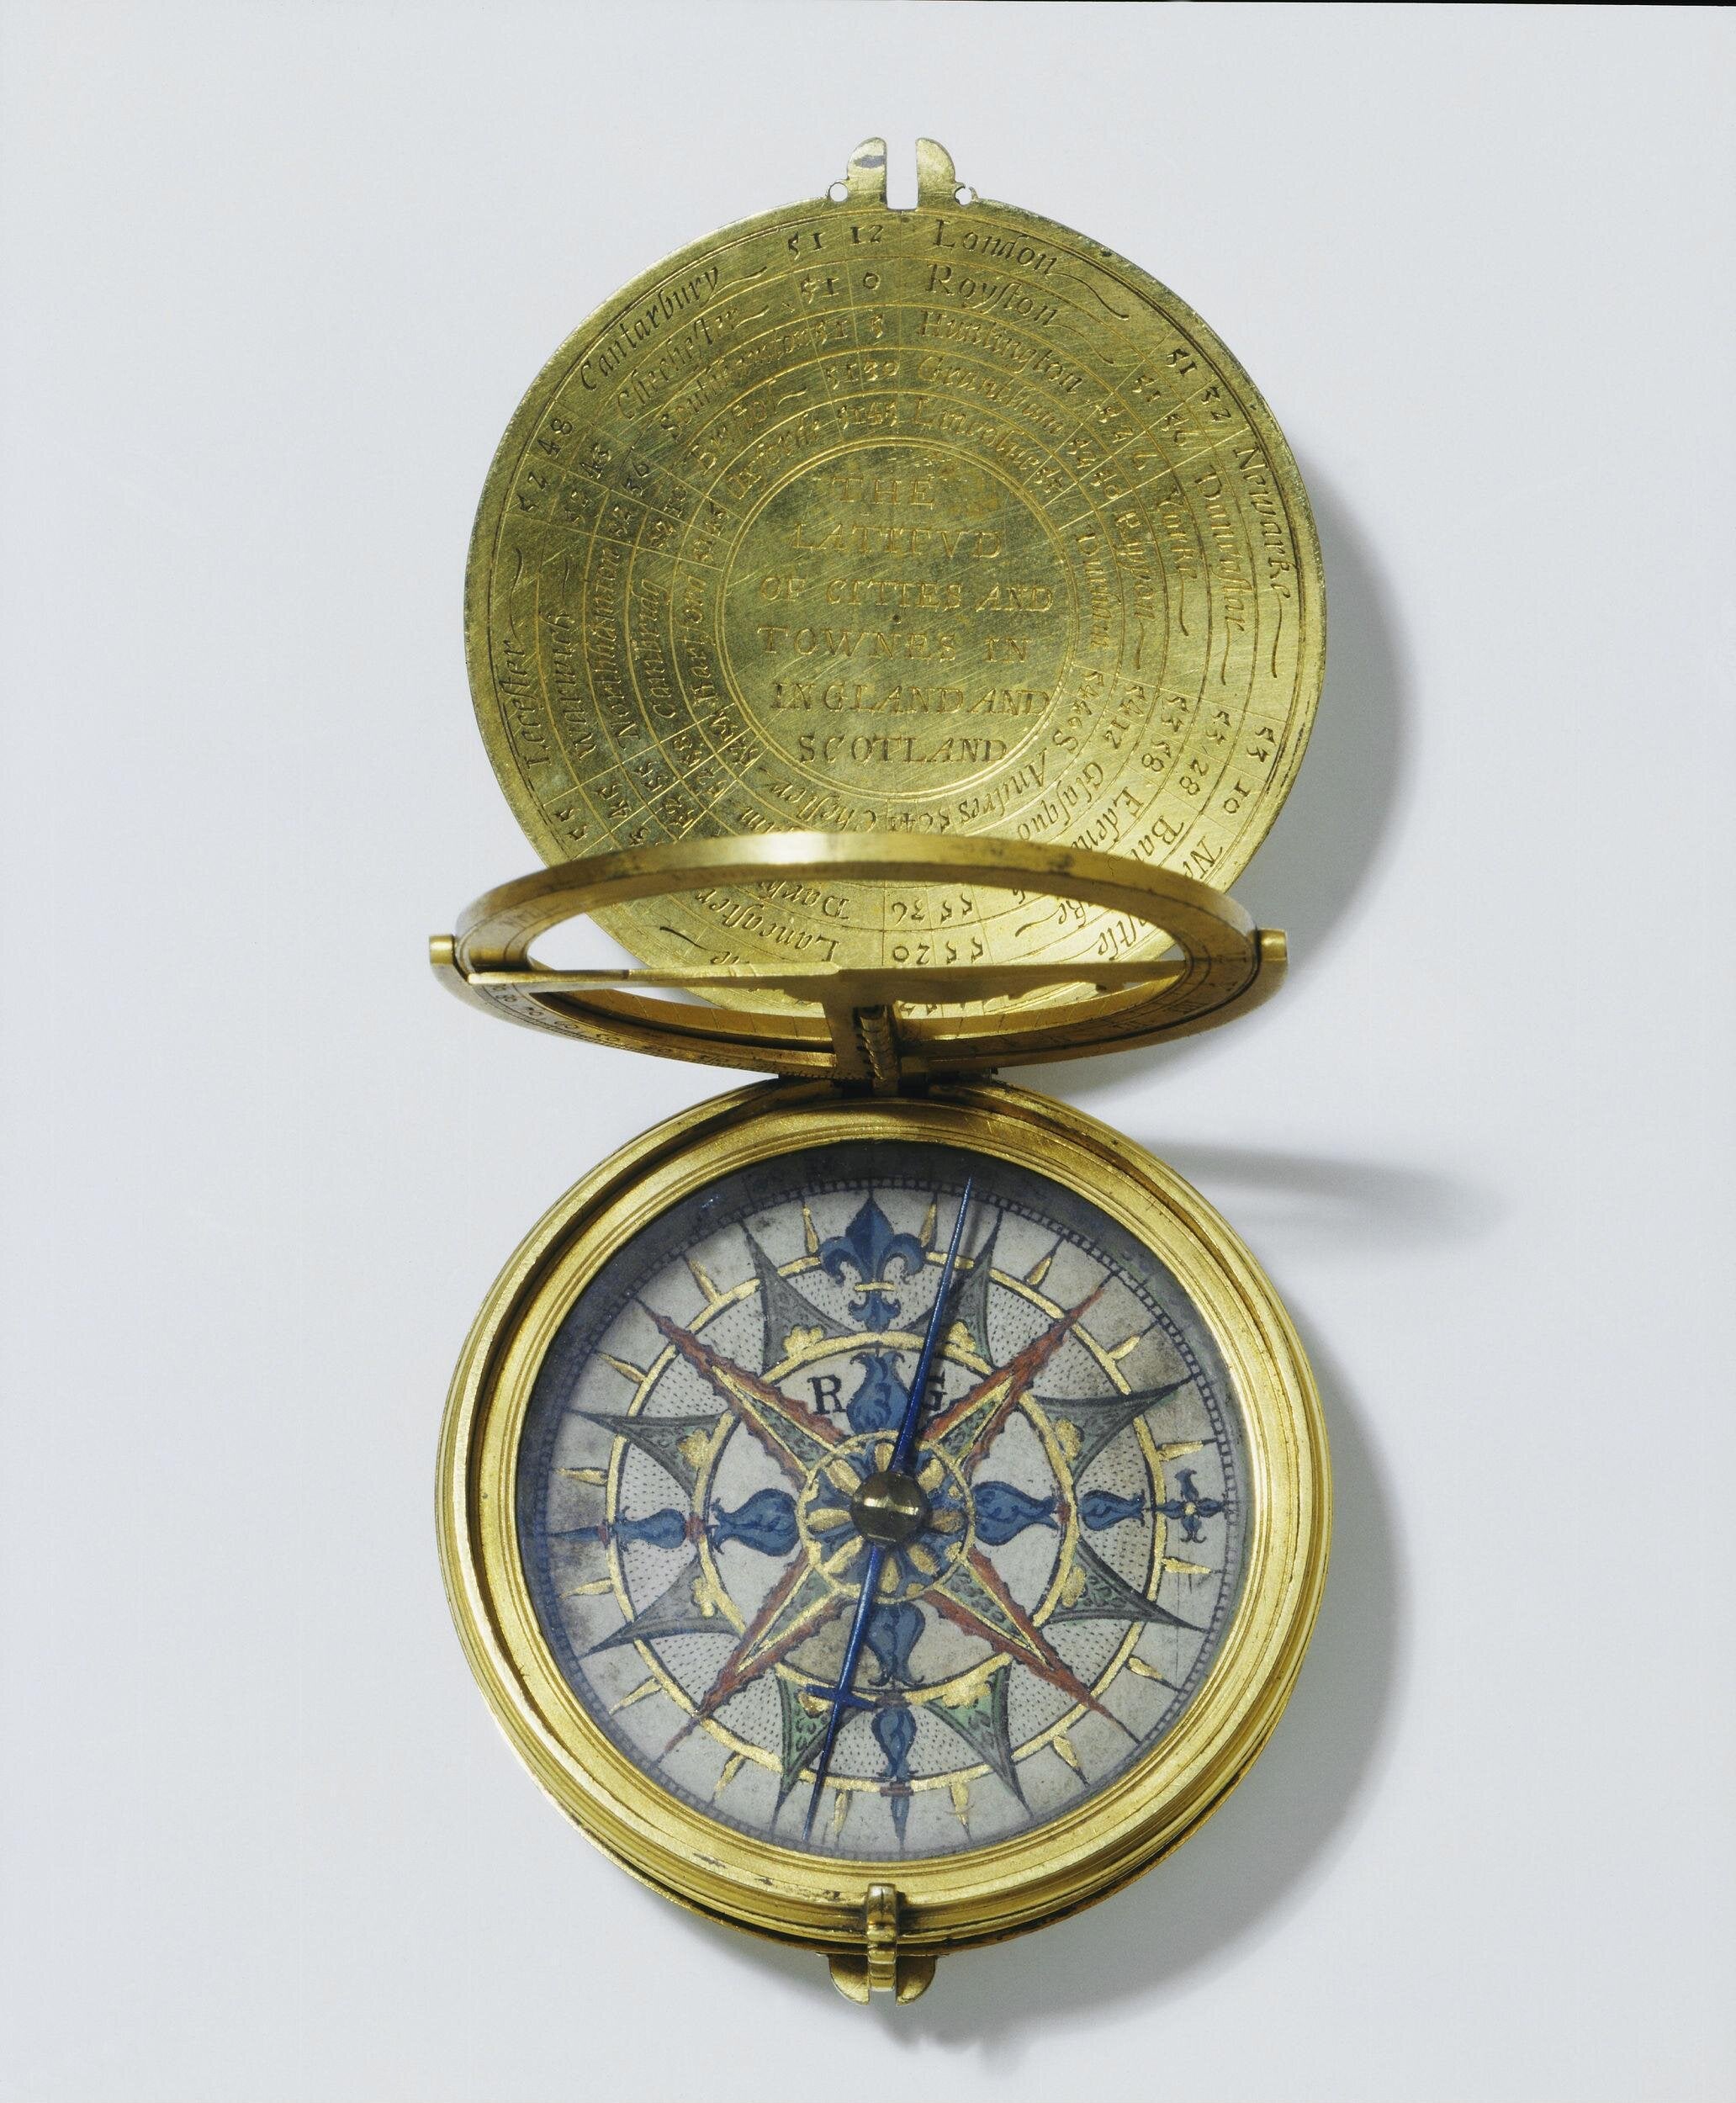 Cast Away: The clock versus the compass